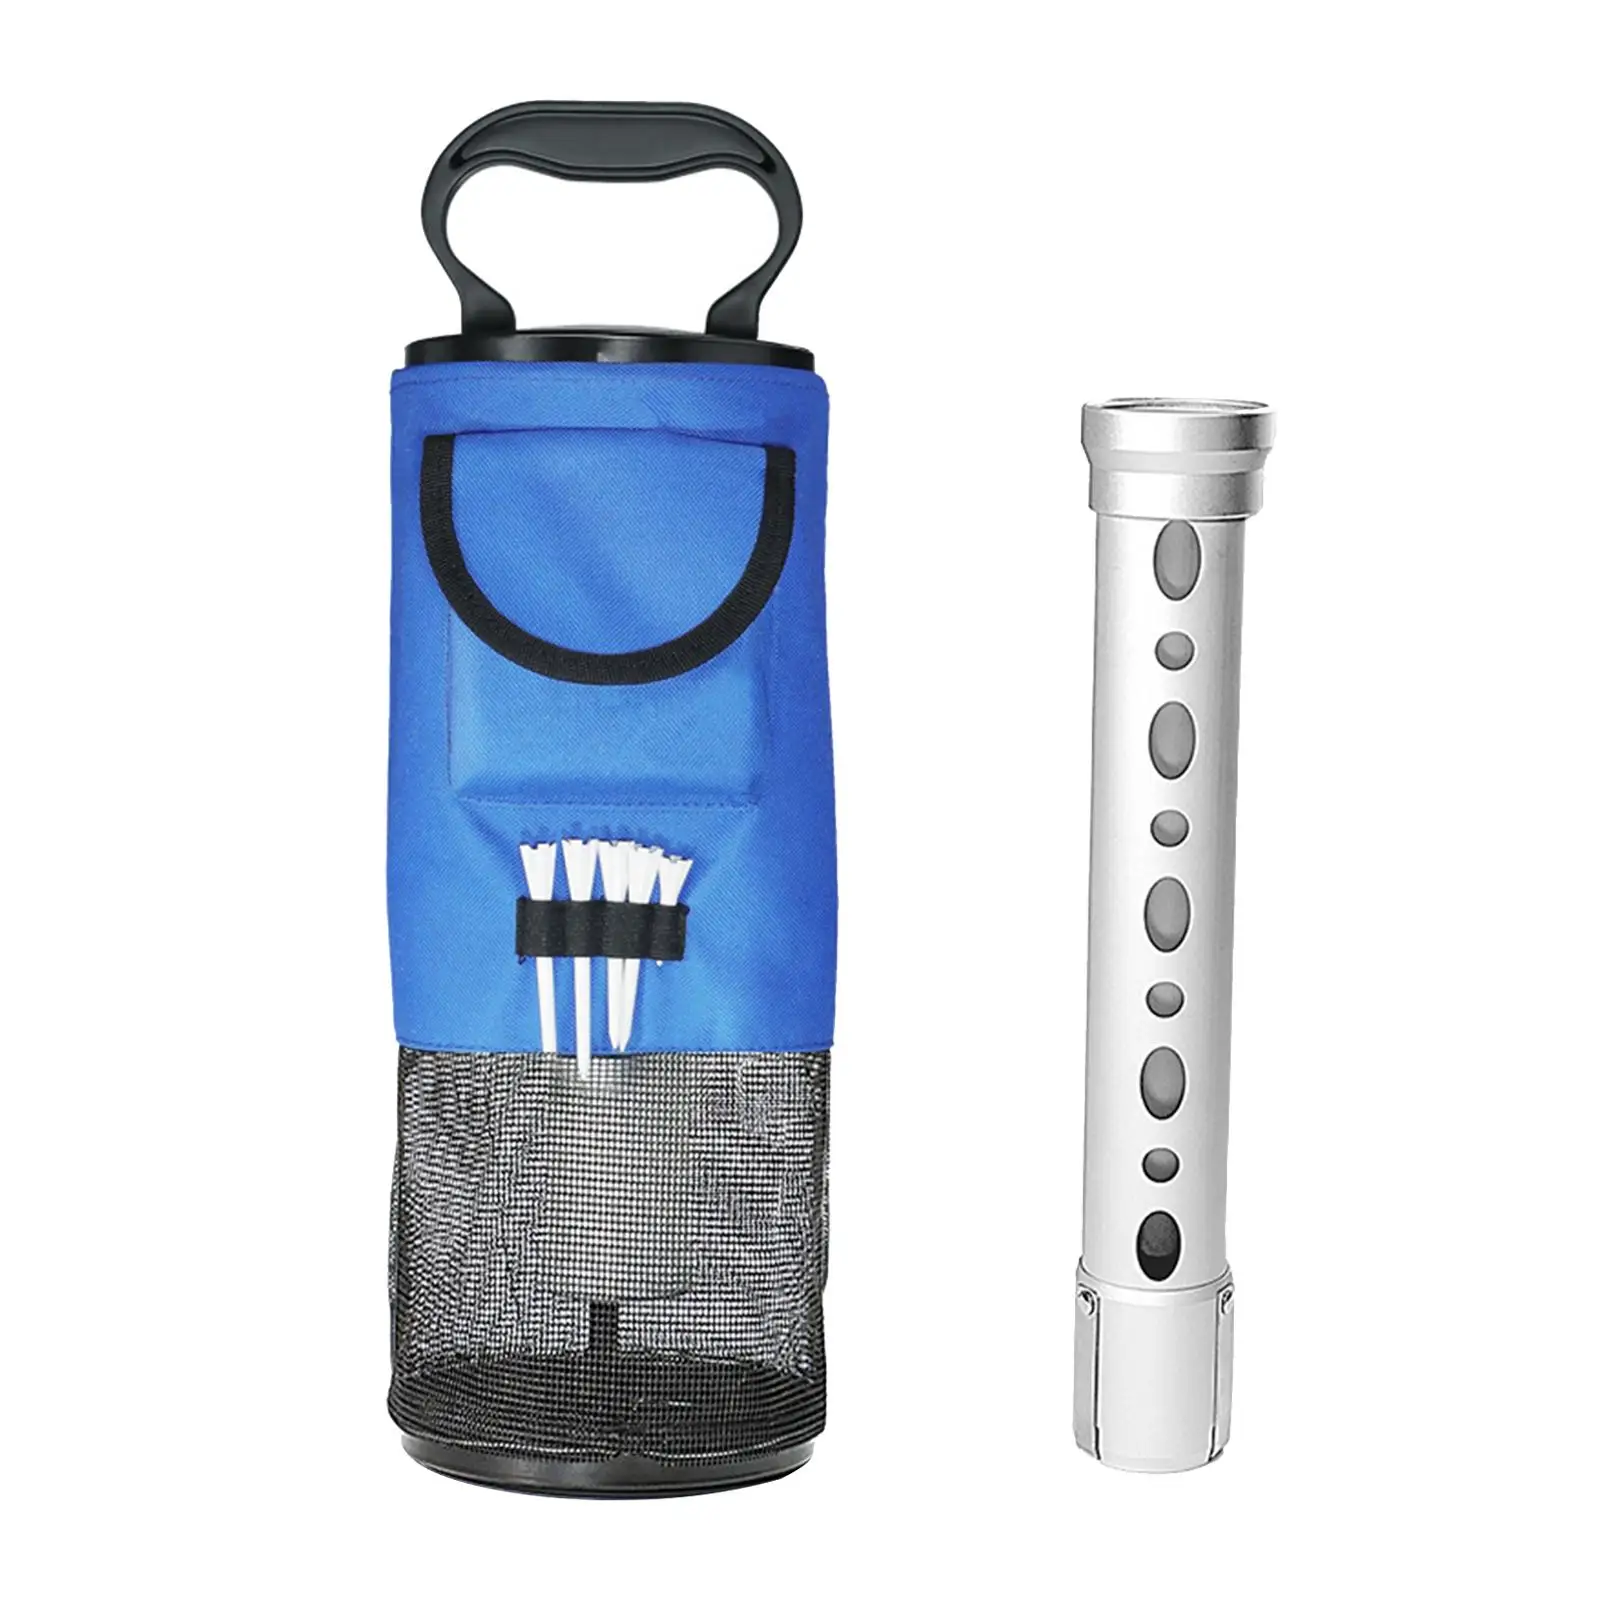 Golf Shag of Bag Retriever Aluminium Tube Convenient with Pocket Device Portable Holds 70 Balls Golf Ball Pick up